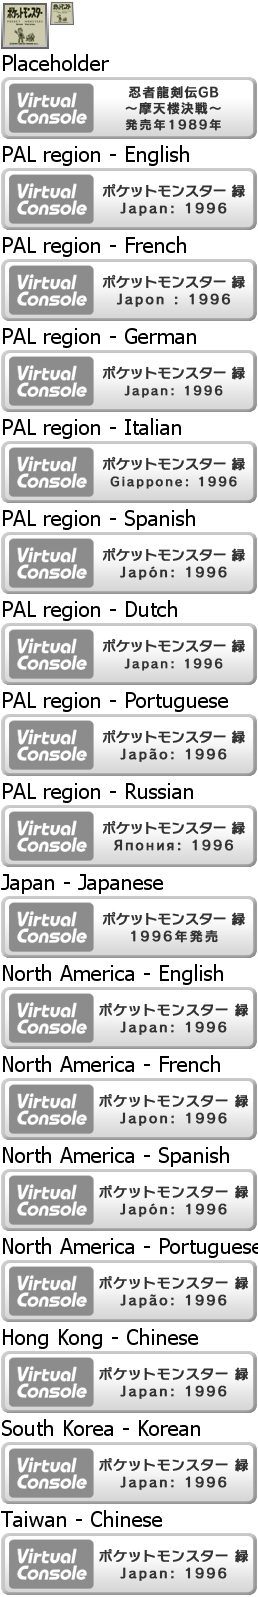 Virtual Console - Pocket Monsters Midori